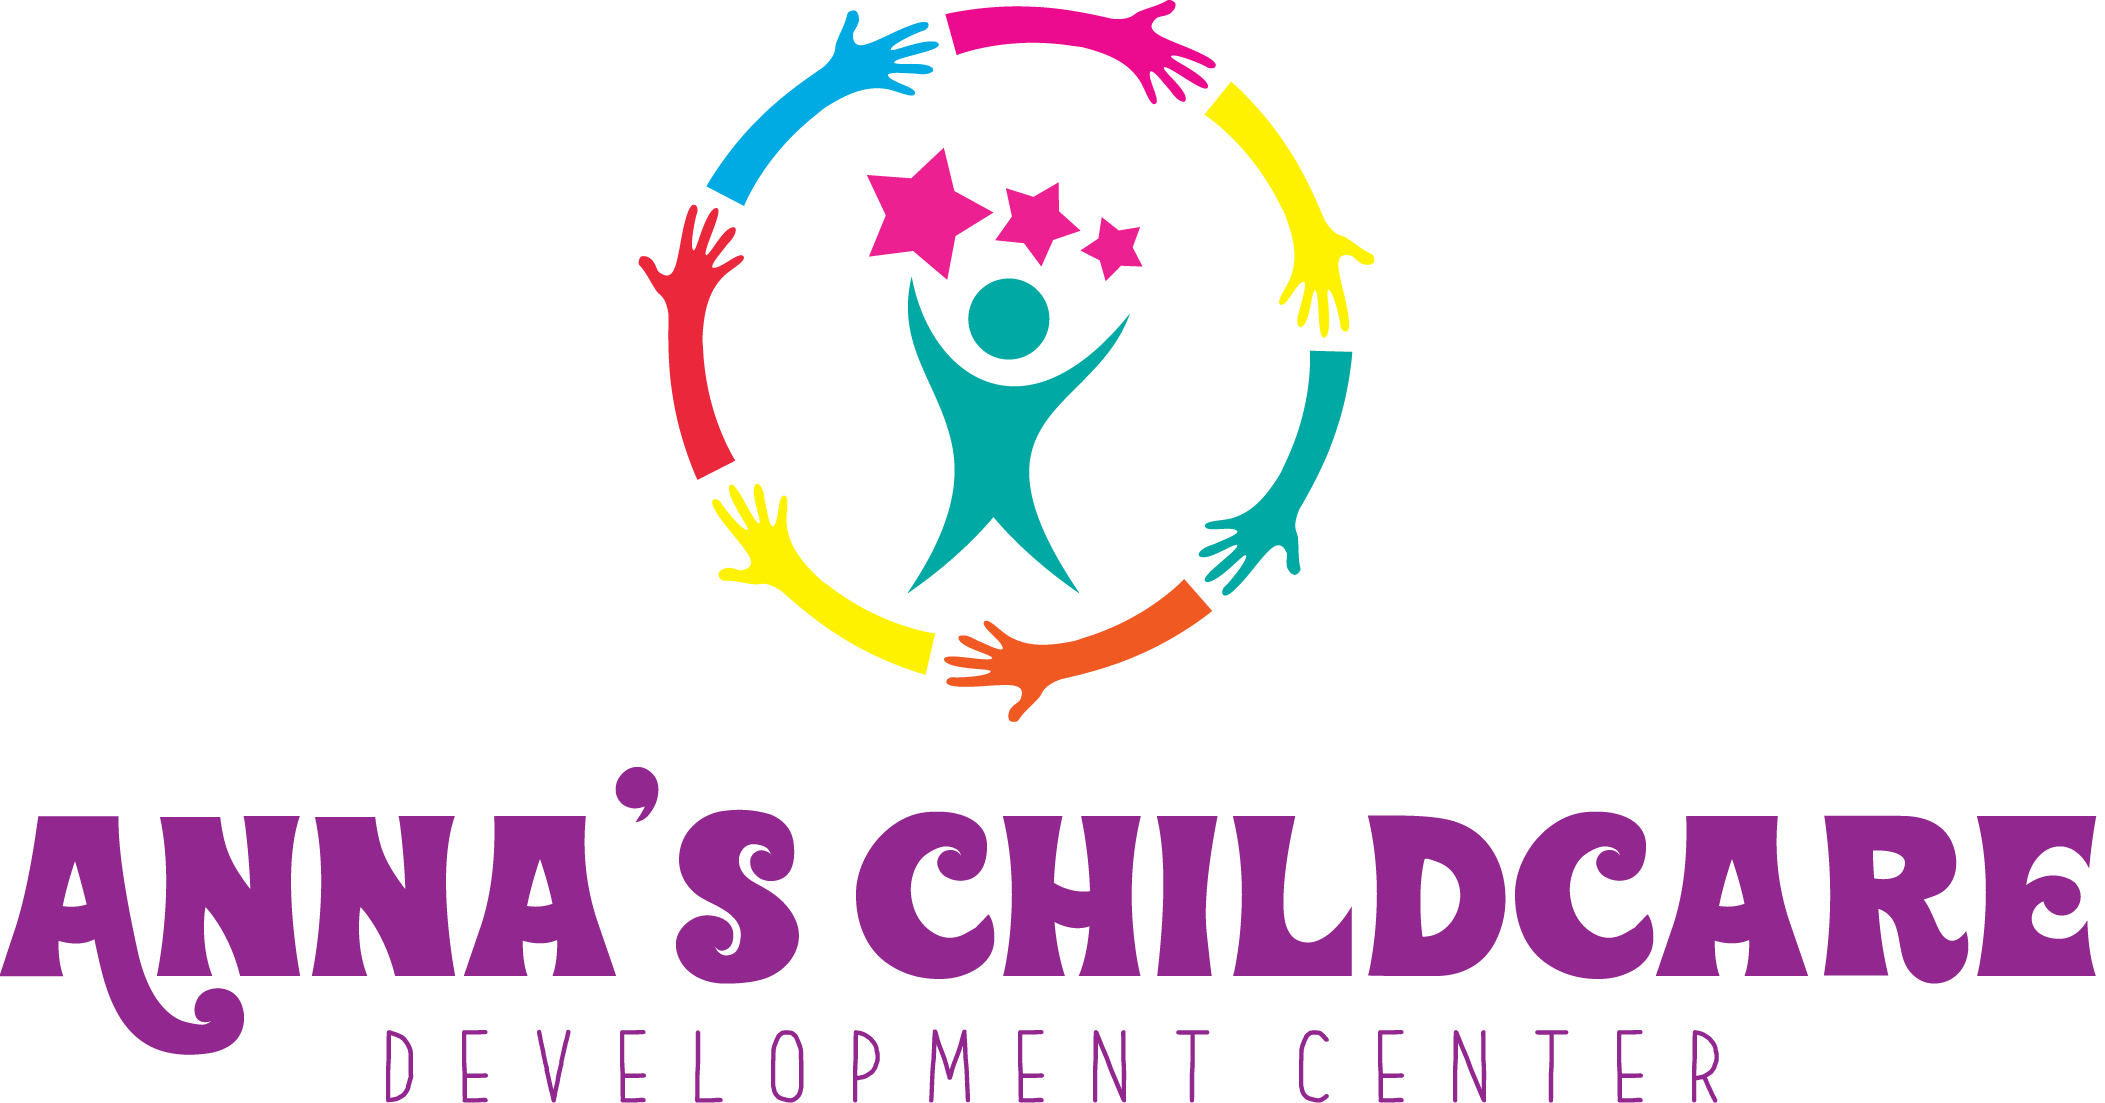 Anna's Childcare - Development Center